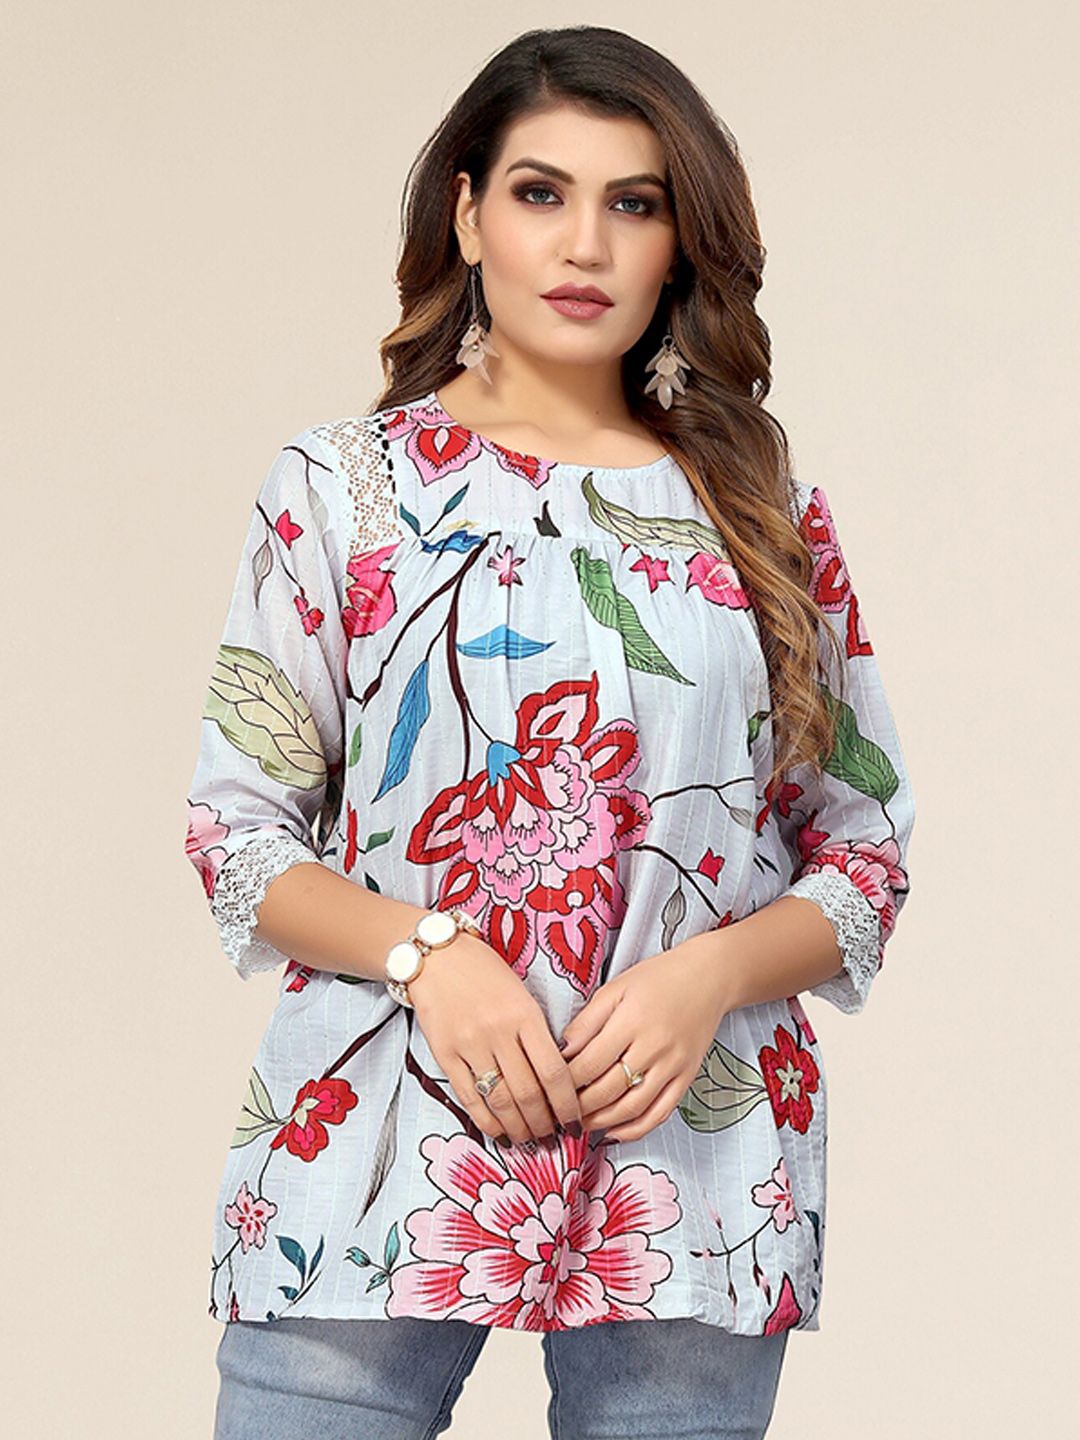 Winza Designer Grey Floral Print Top Price in India